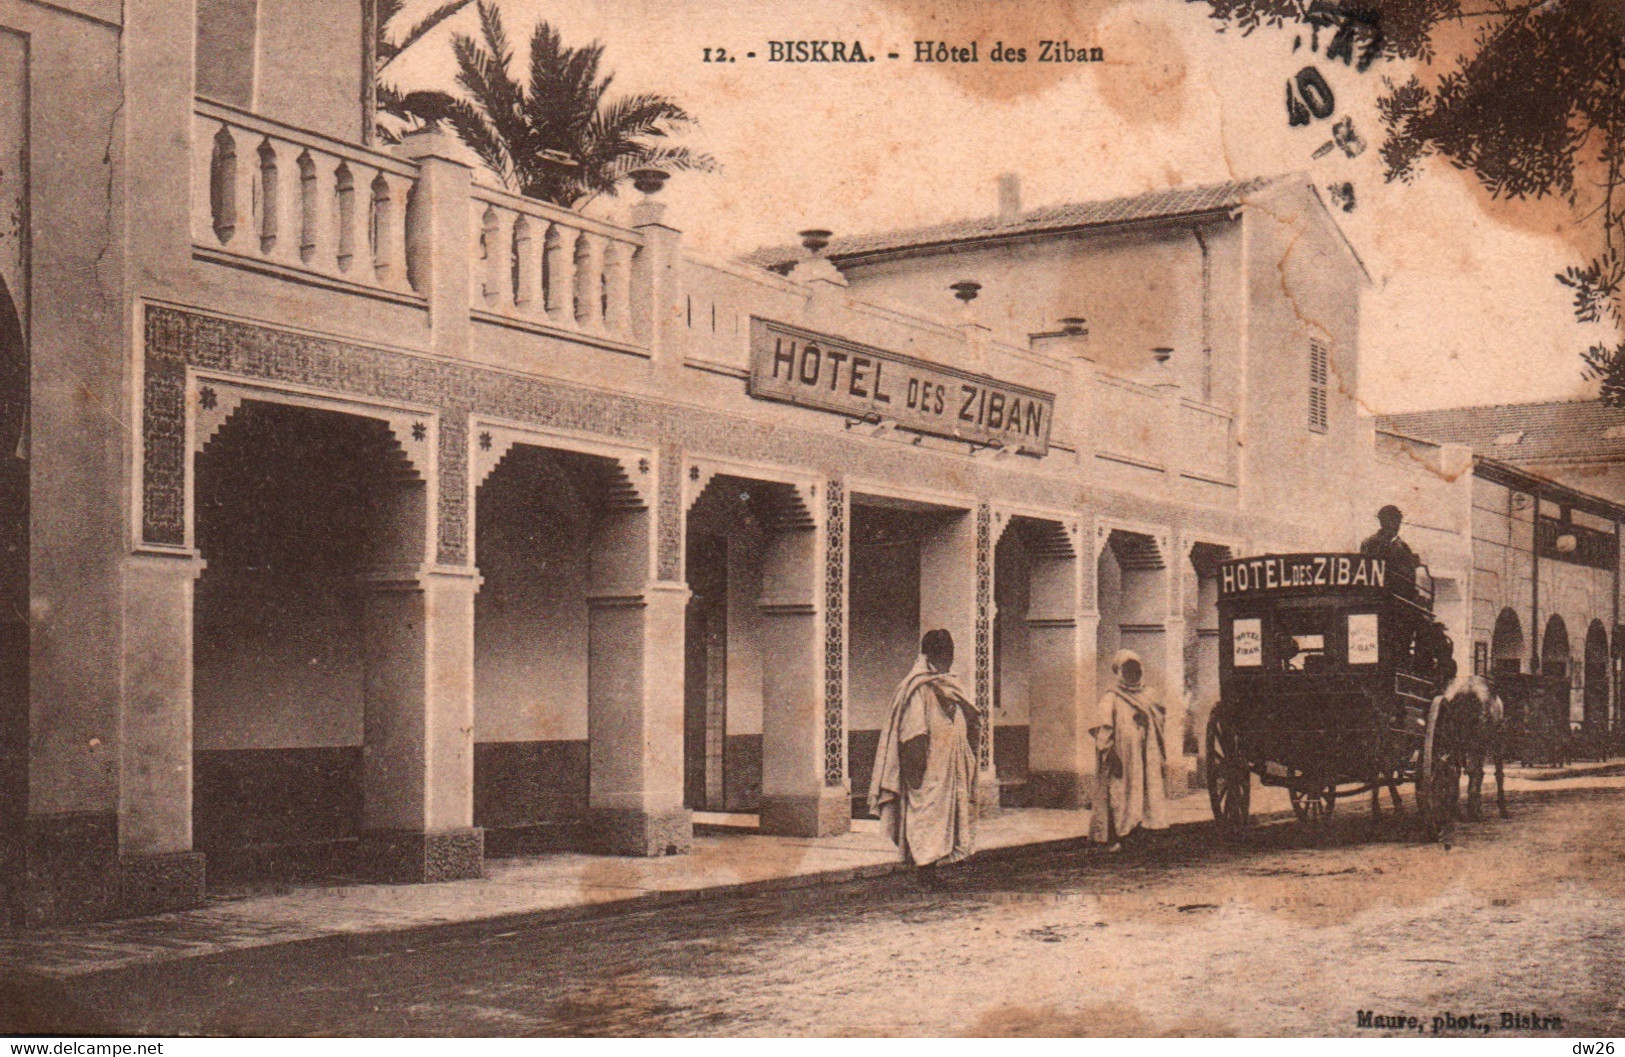 Biskra - Hôtel Des Ziban, Voiture à Cheval - Photo Maure - Carte N° 12 De 1917 - Constantine